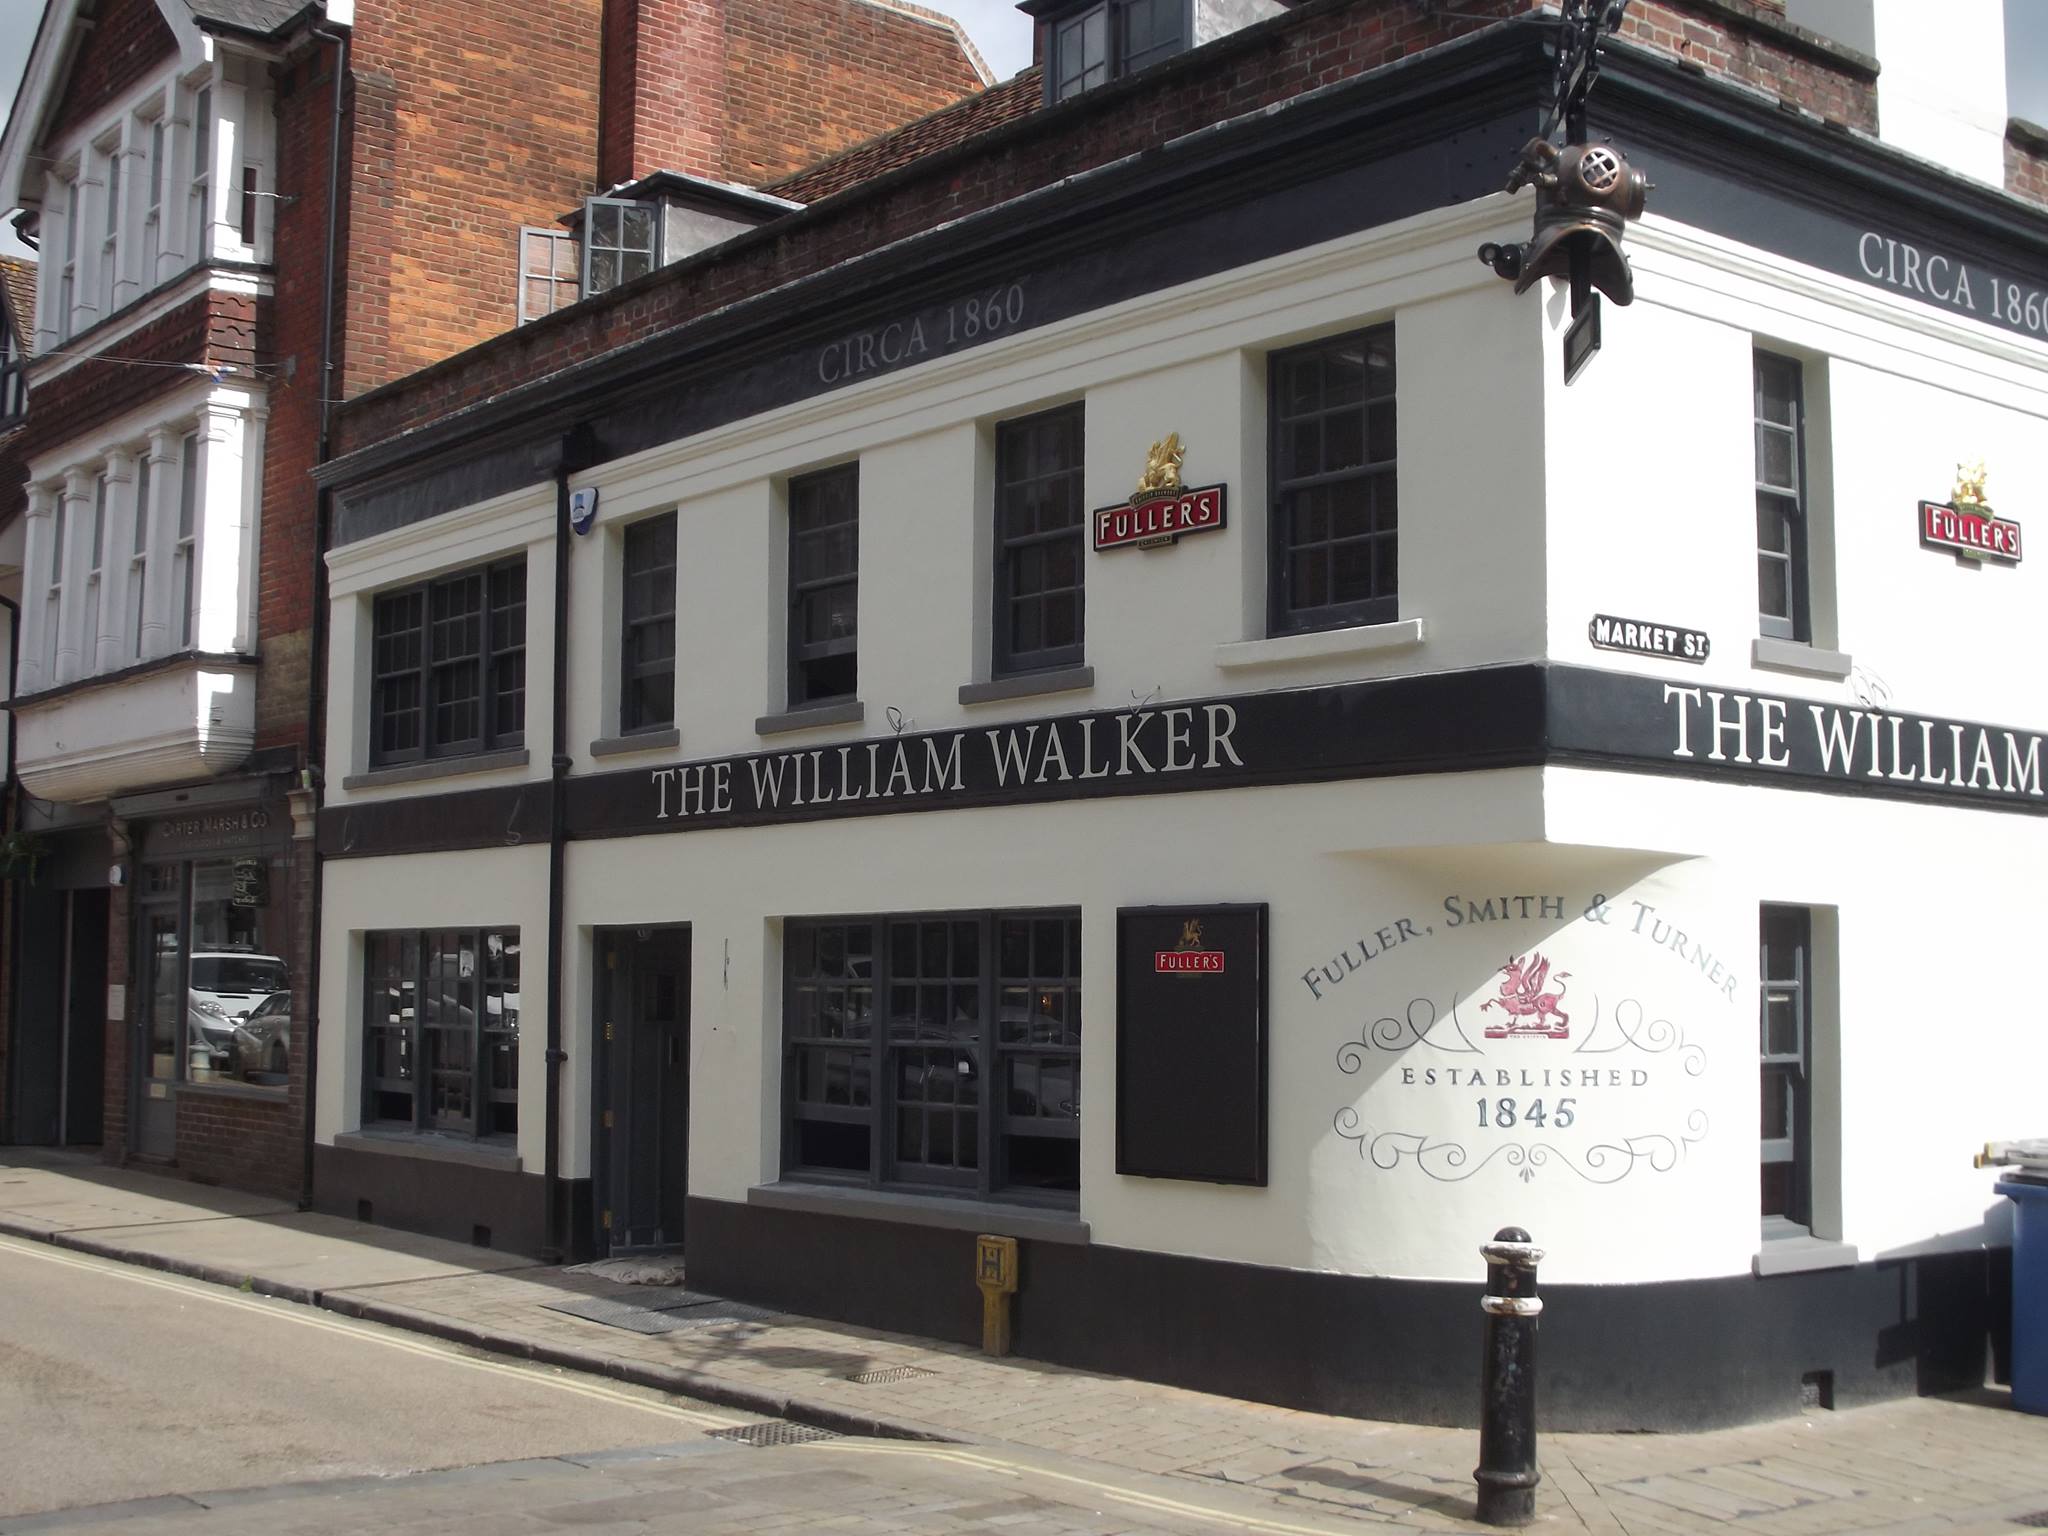 The William Walker